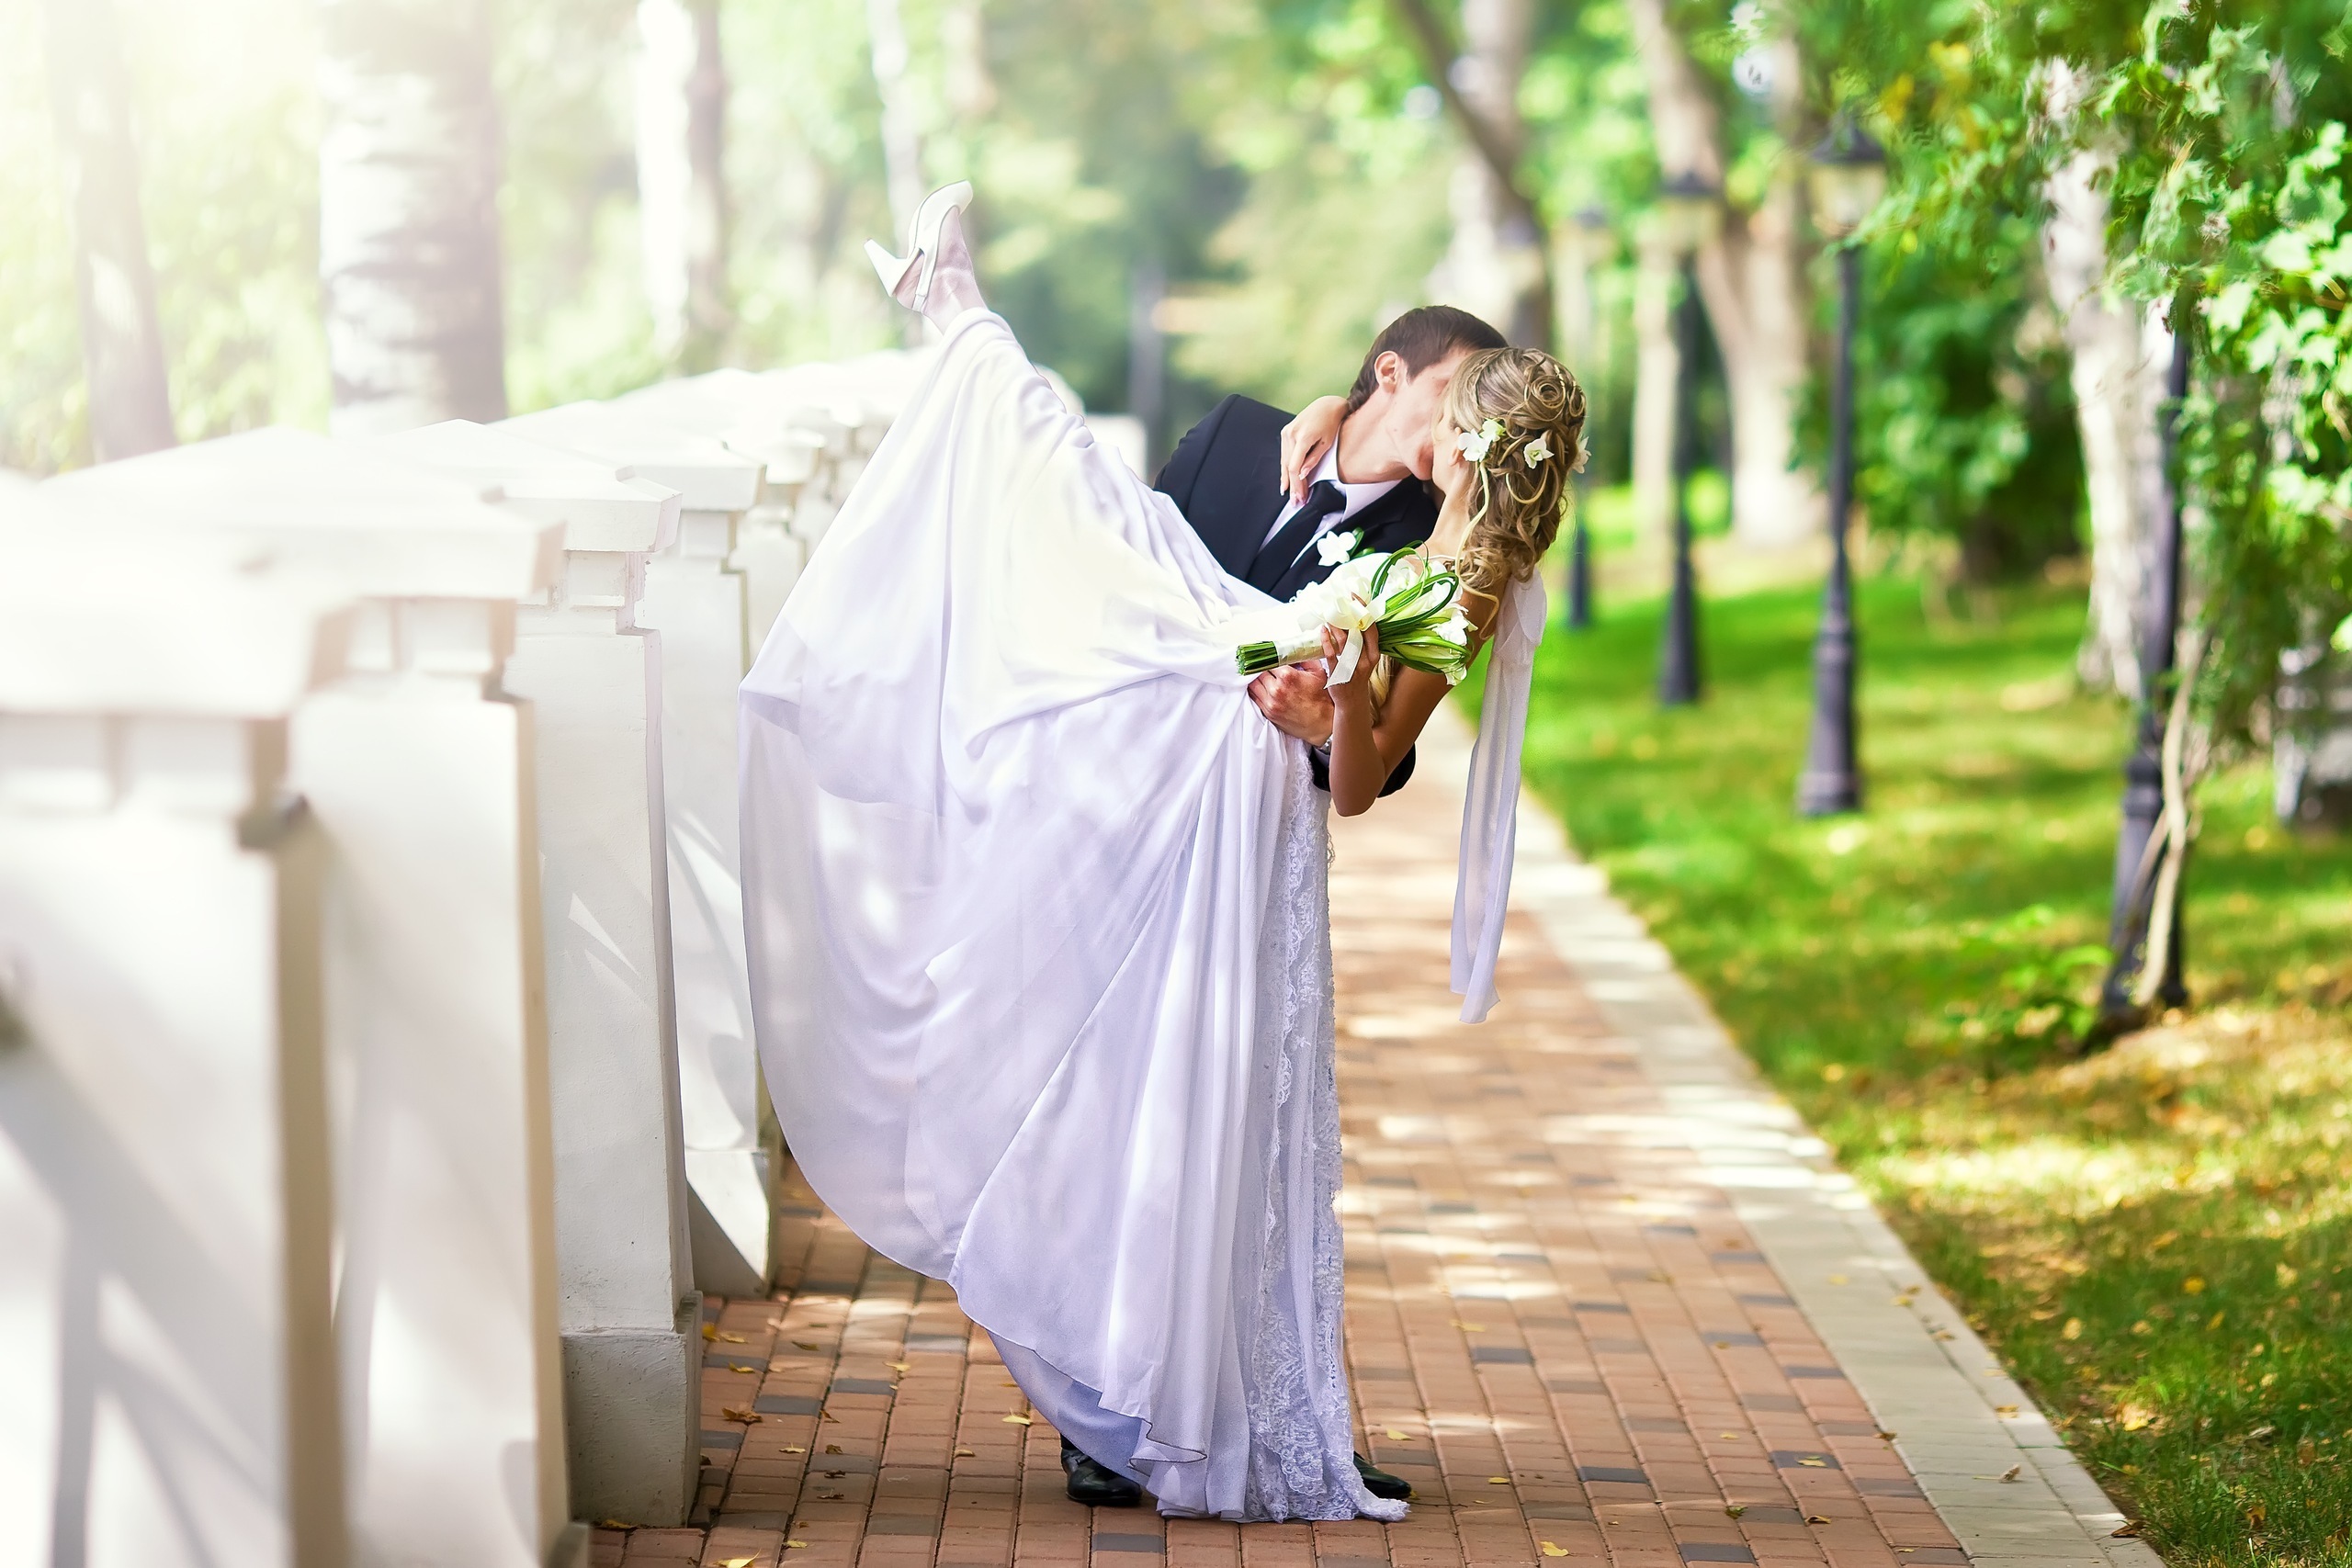 Women Bride HD Wallpaper | Background Image